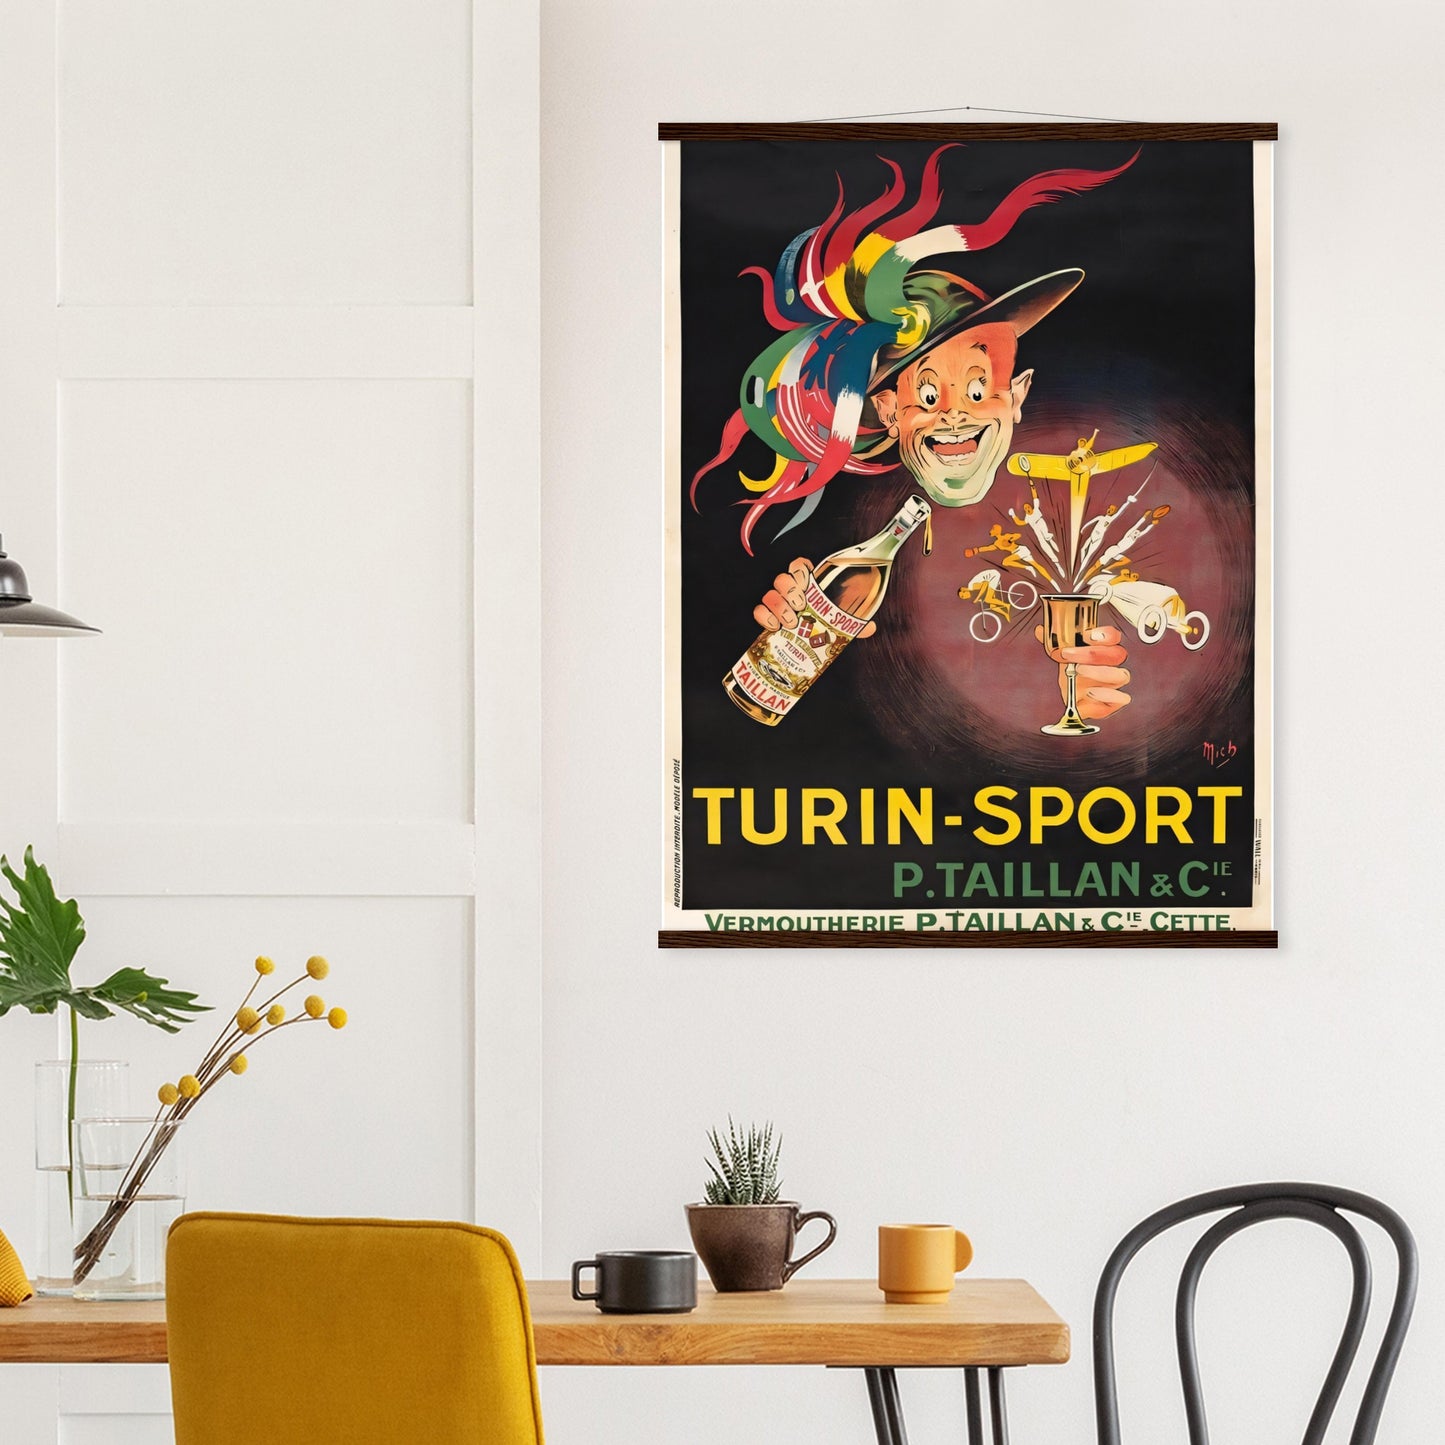 Turin Vintage Poster Reprint on Premium Matte Paper - Posterify